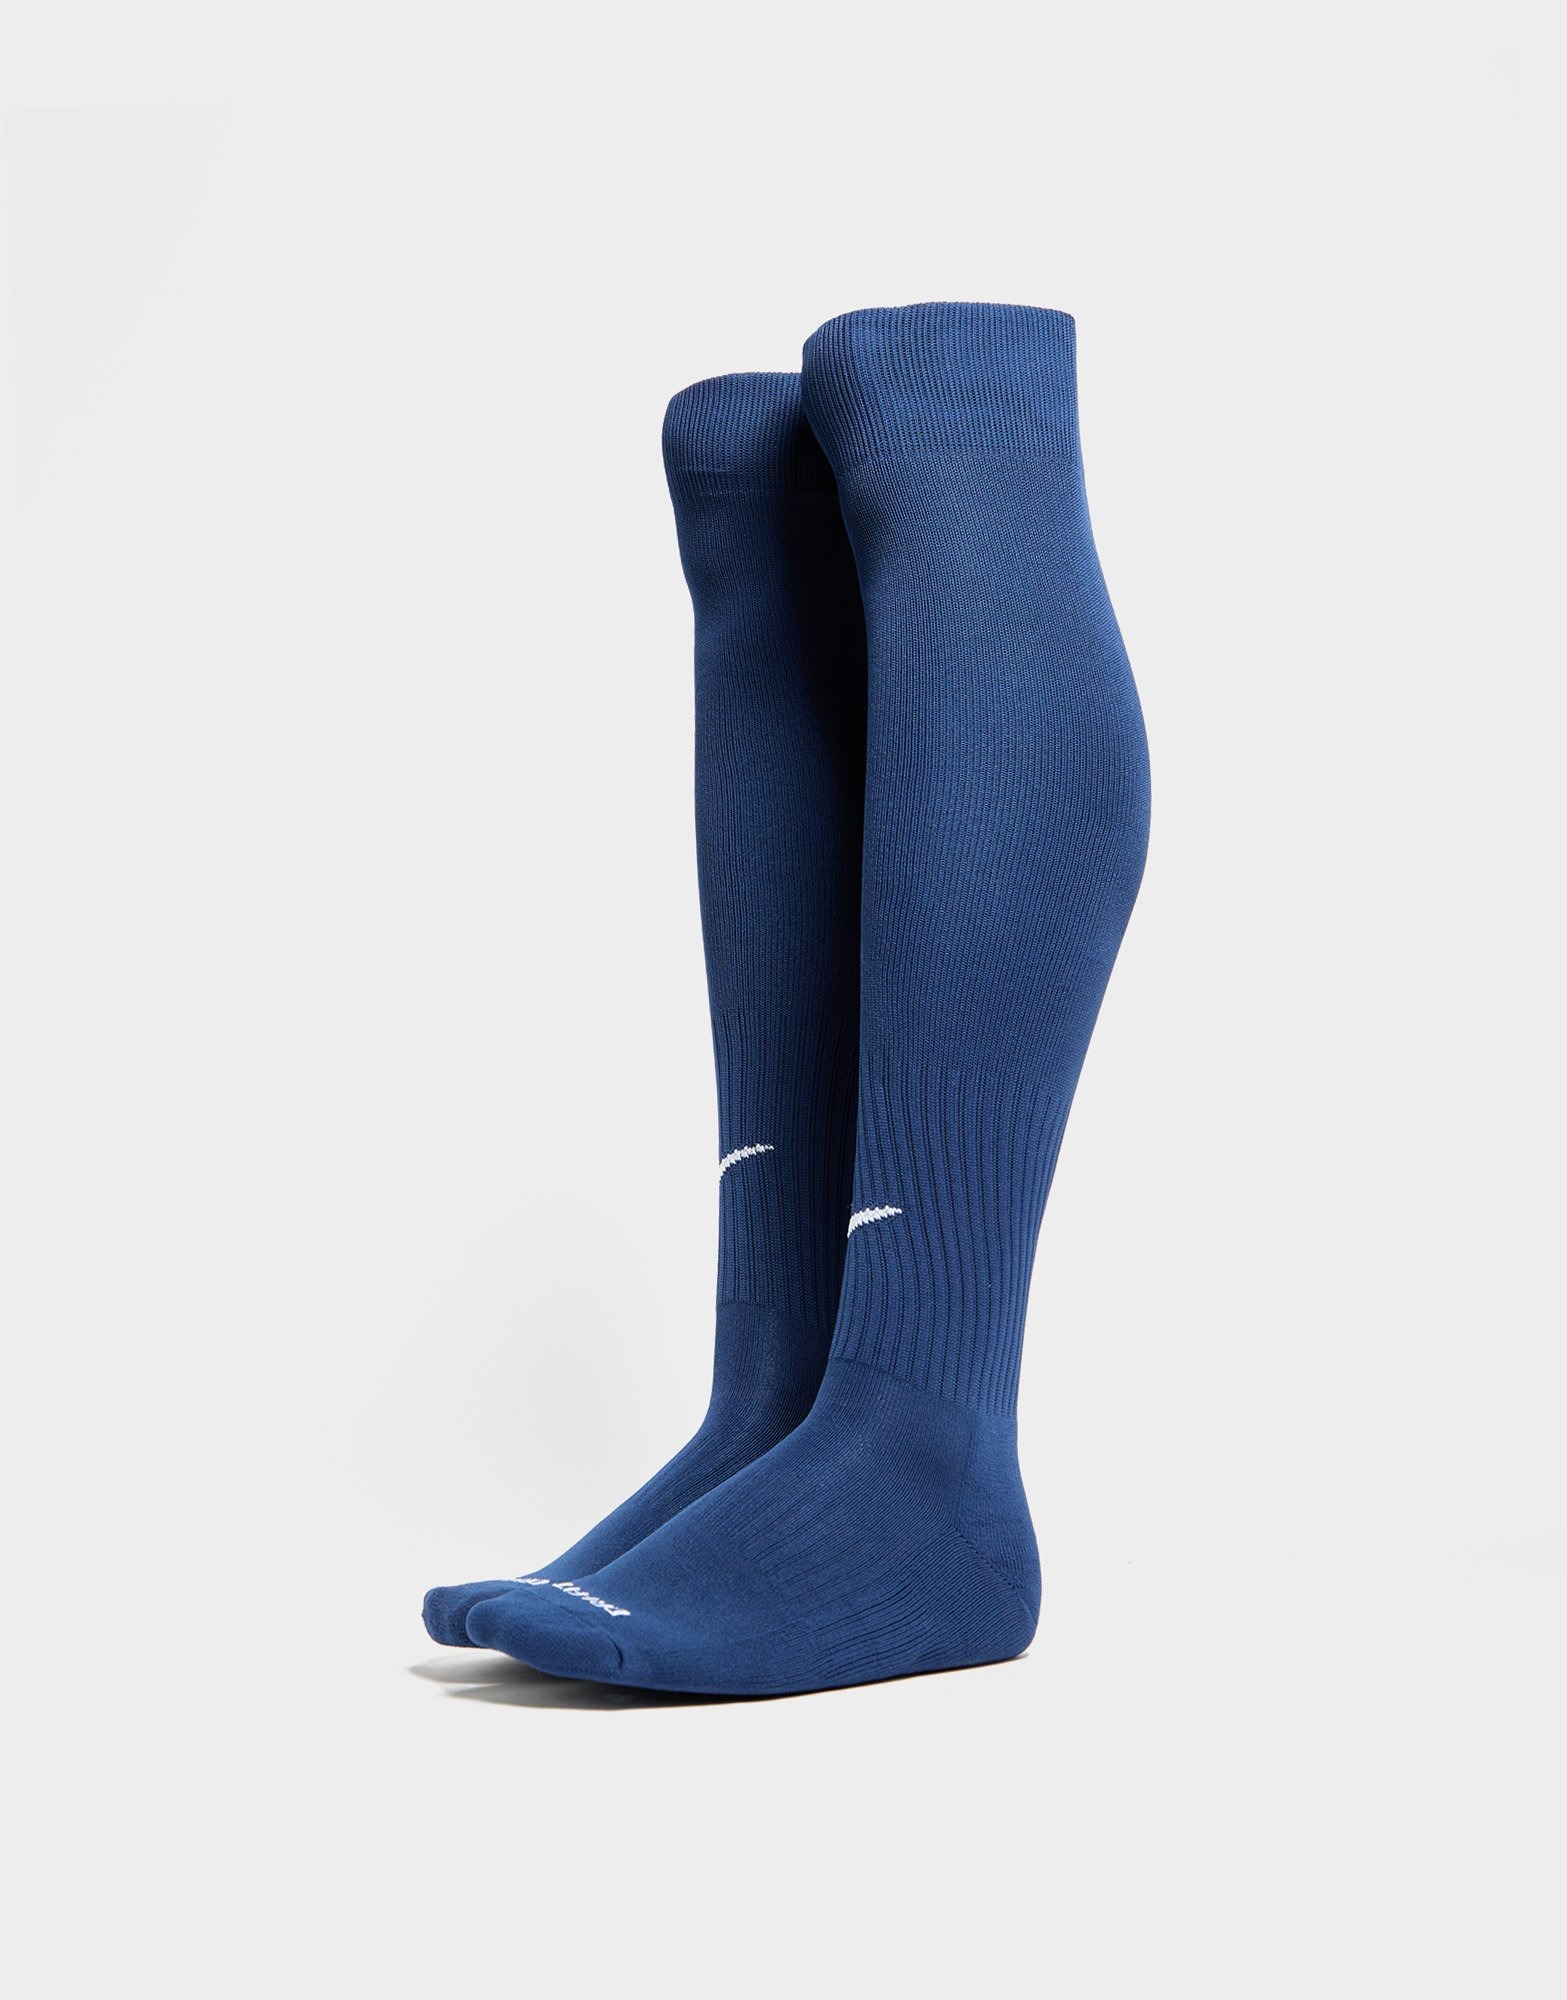 Blue Nike Football Socks | UK